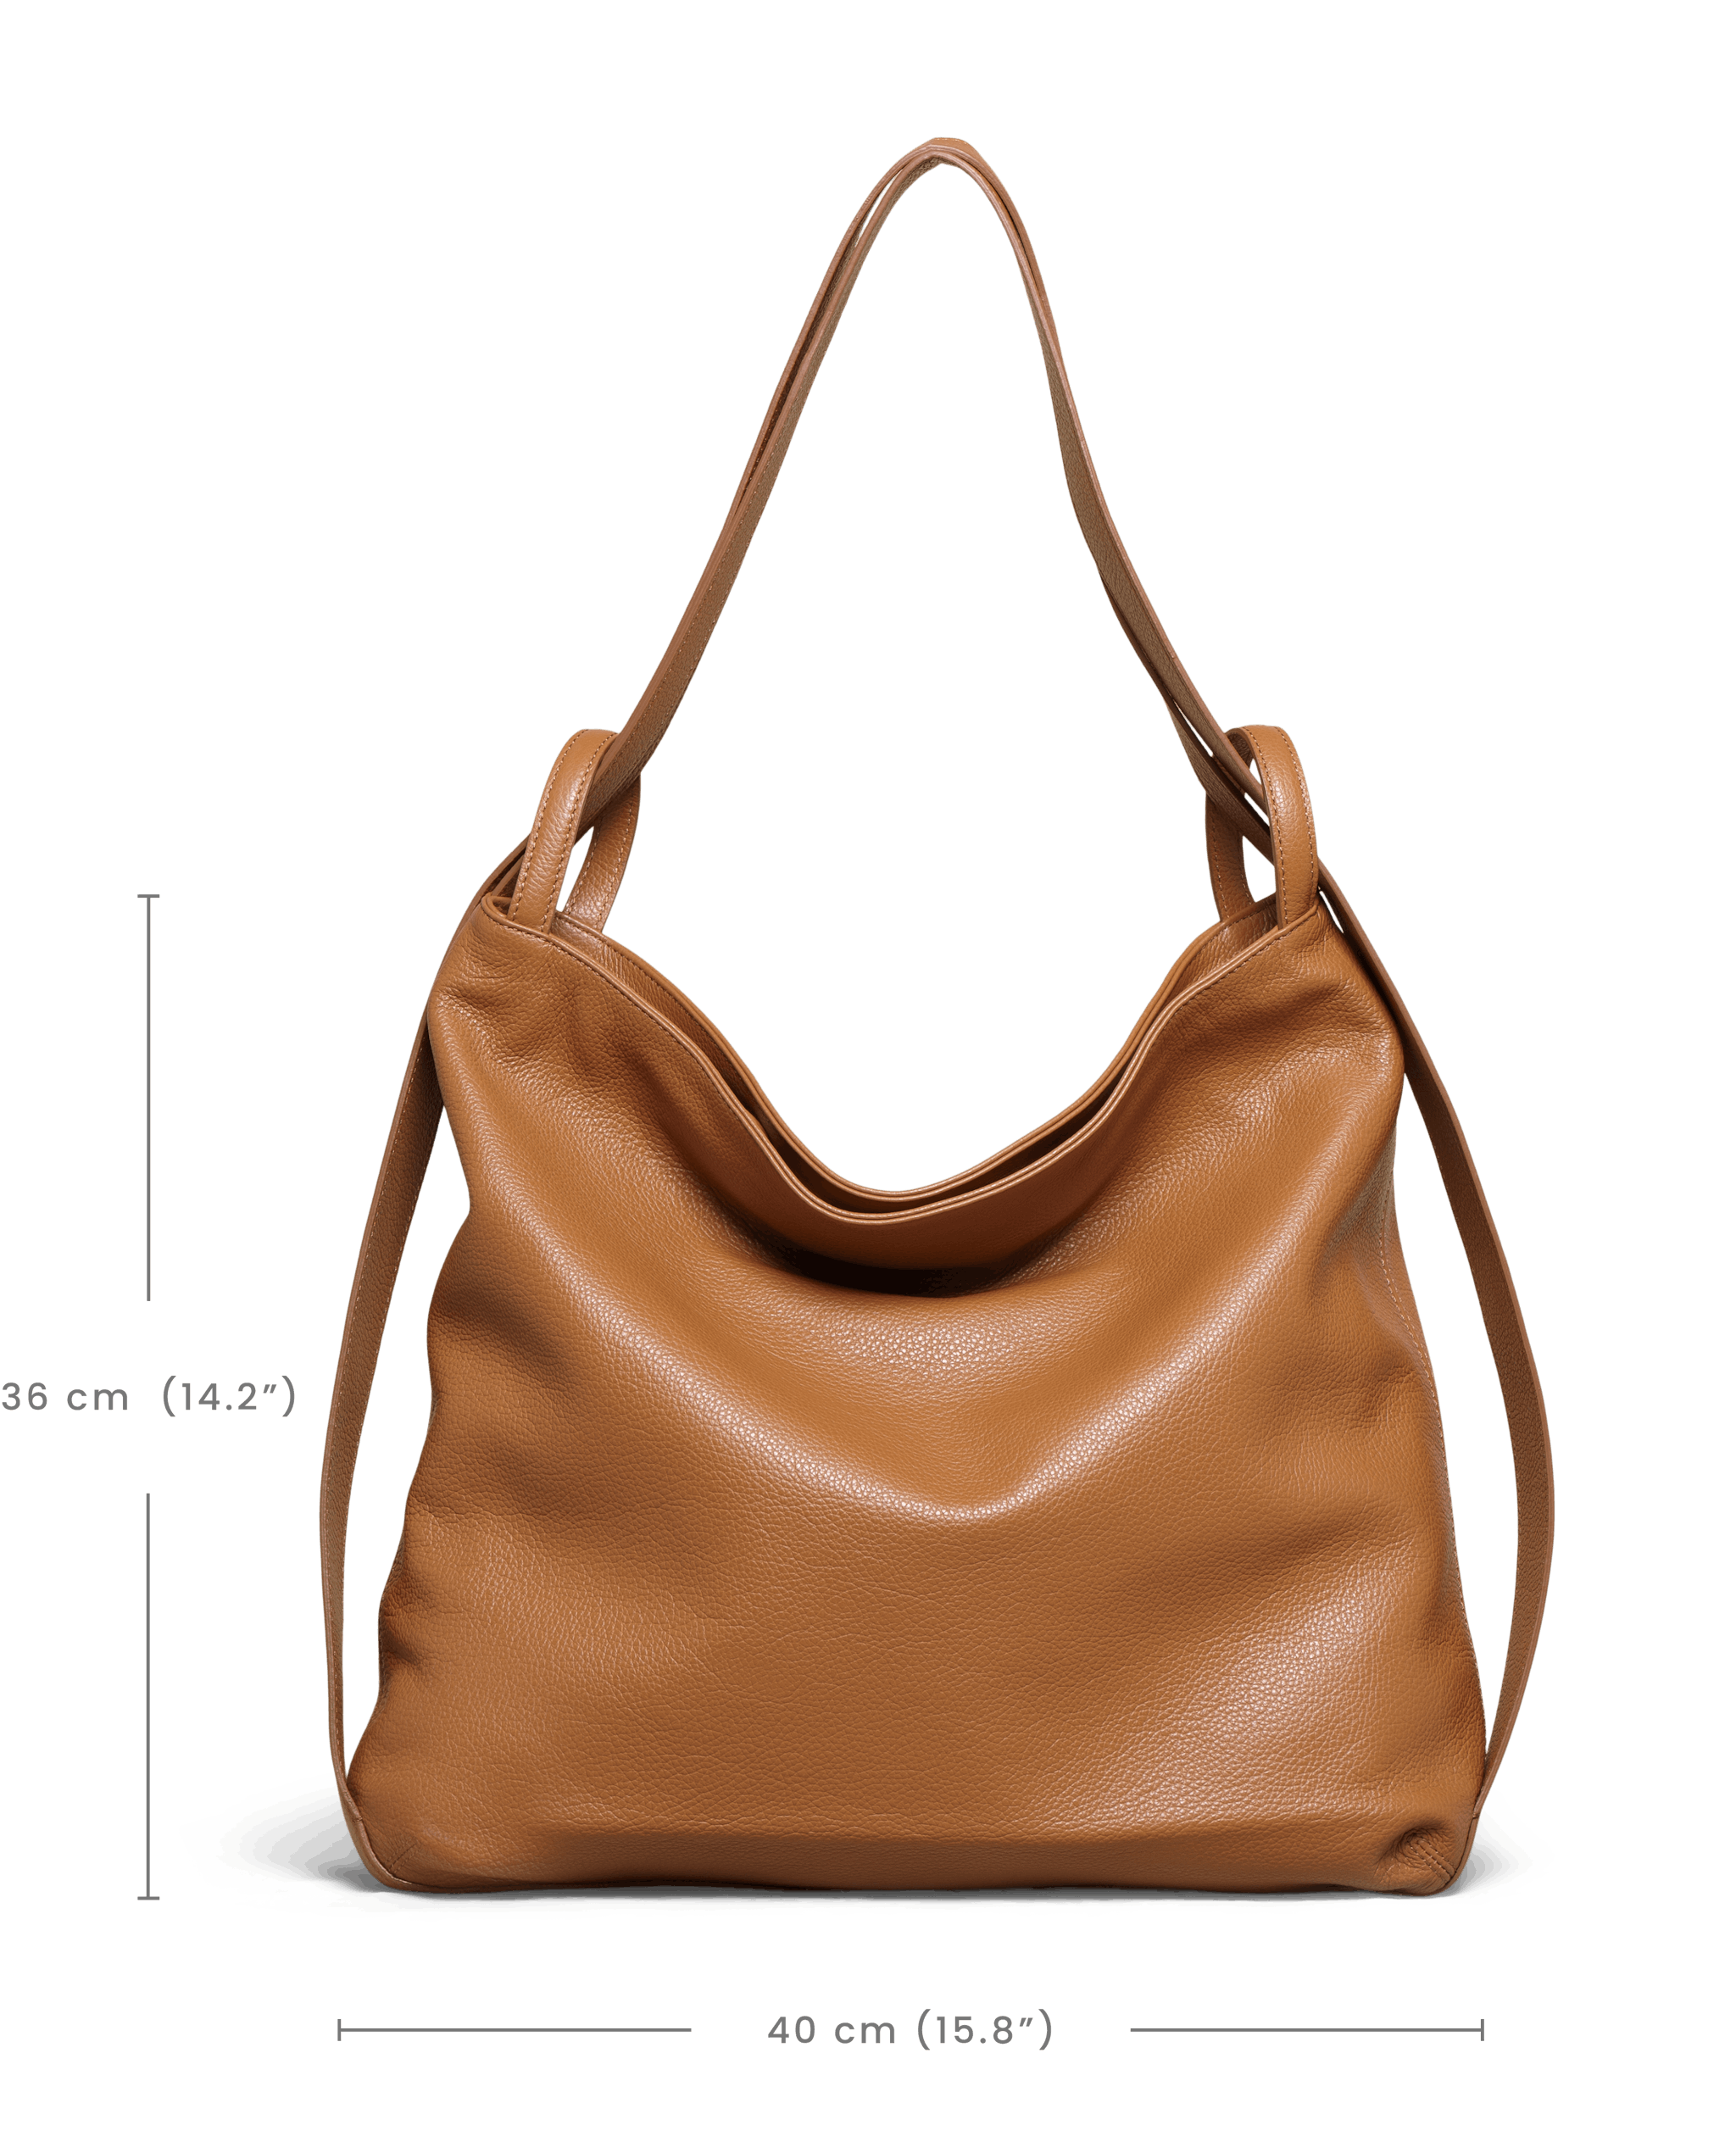 Convertible PU Leather Satchel Handbags and Shoulder Bag Travel Bag Women's  Fashion Backpack Multipurpose Design (Blue), medium